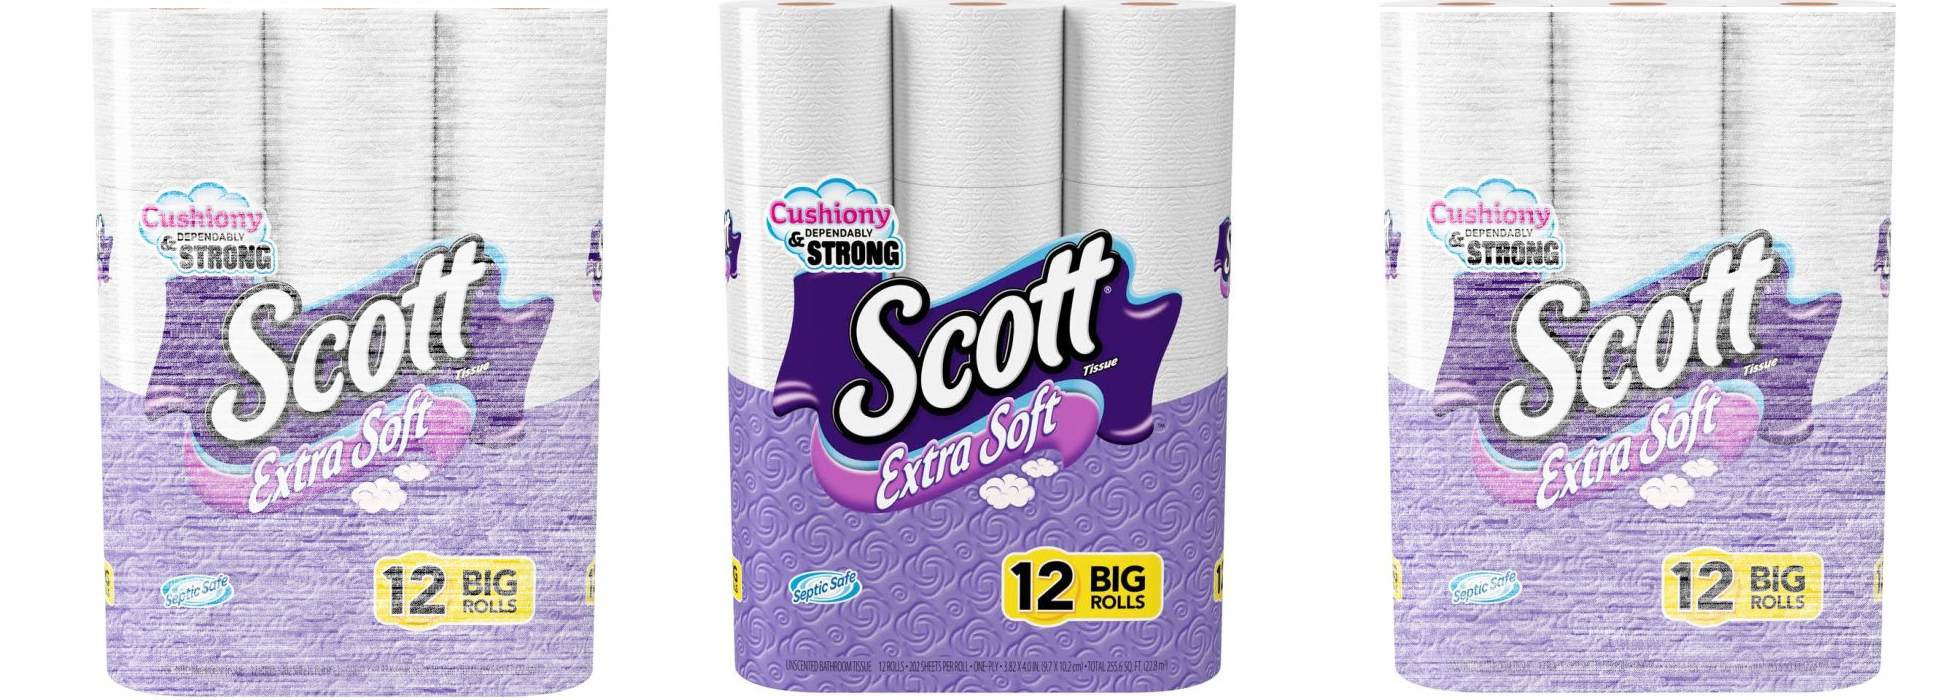 Scott Extra Soft At Walgreens